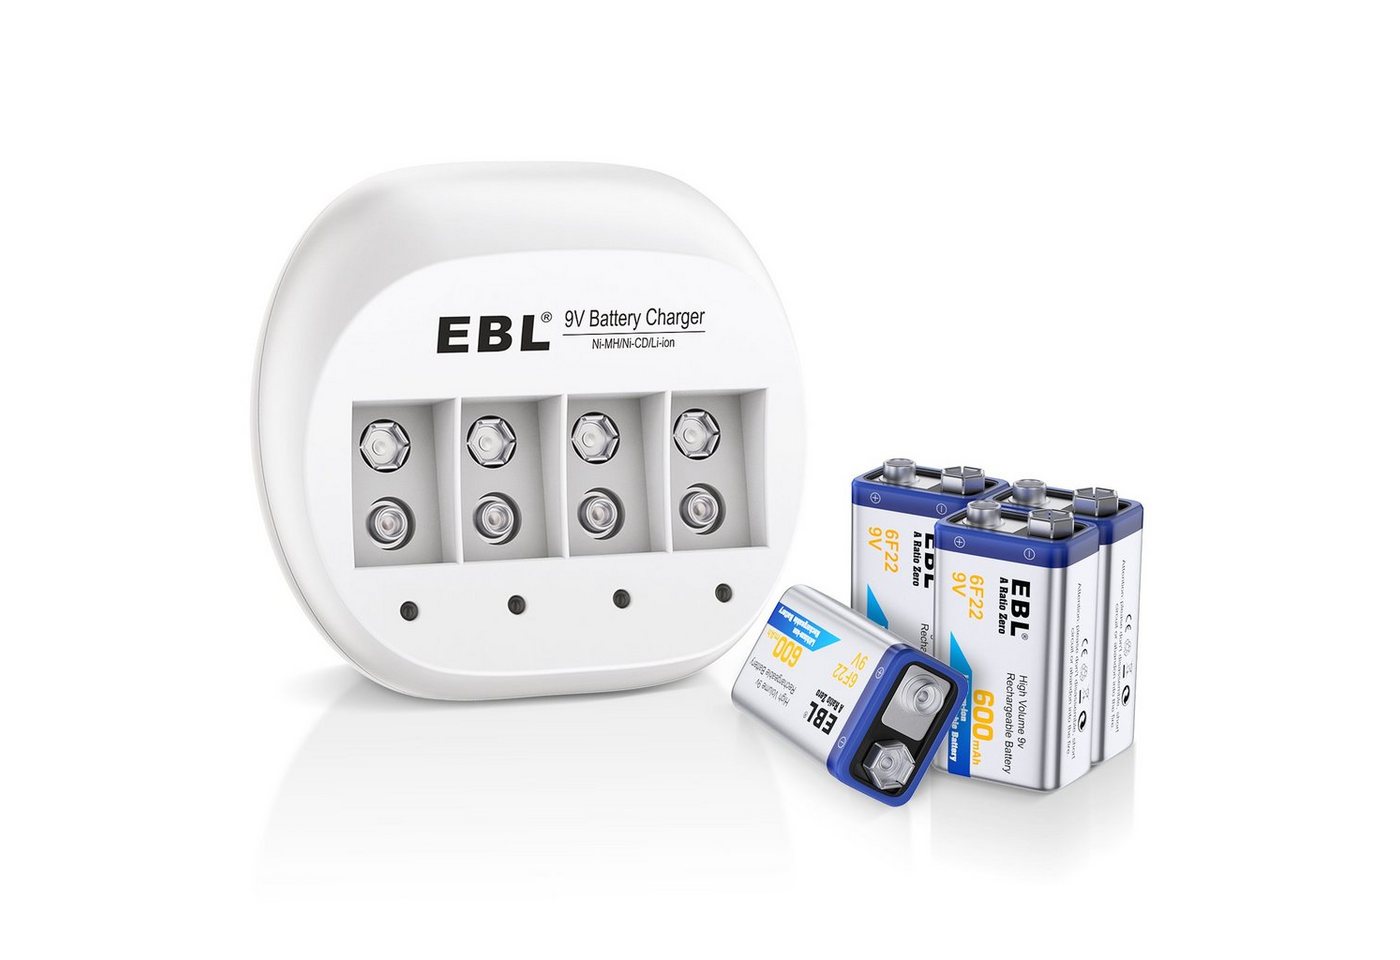 EBL Akku Ladegerät 9v für Li-Ionen wiederaufladbare Batterien Batterie-Ladegerät (1-tlg., mit 4 600mAh 9V Li-ion Akku) von EBL